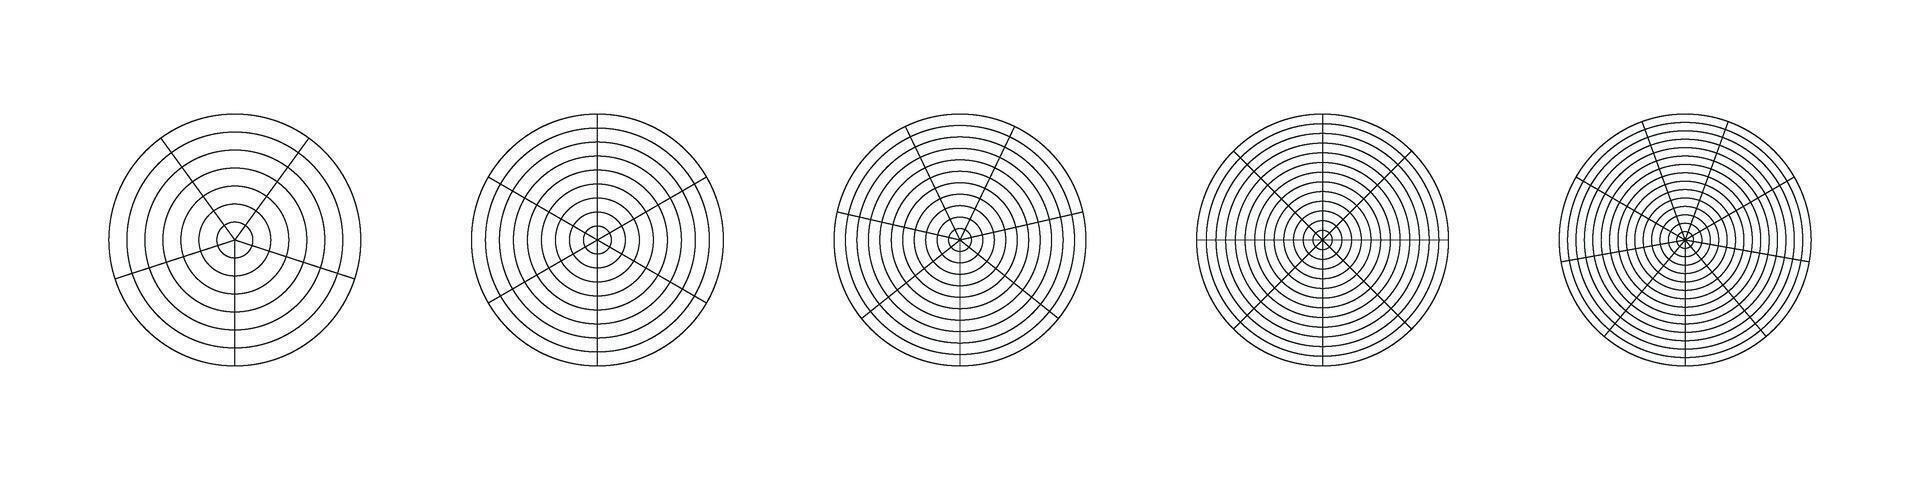 pentágono y hexágono gráfico , para 5 5 punto Radar o araña diagramas para visualizante datos con estructurado grafico acercarse. plano vector ilustración aislado en blanco antecedentes.